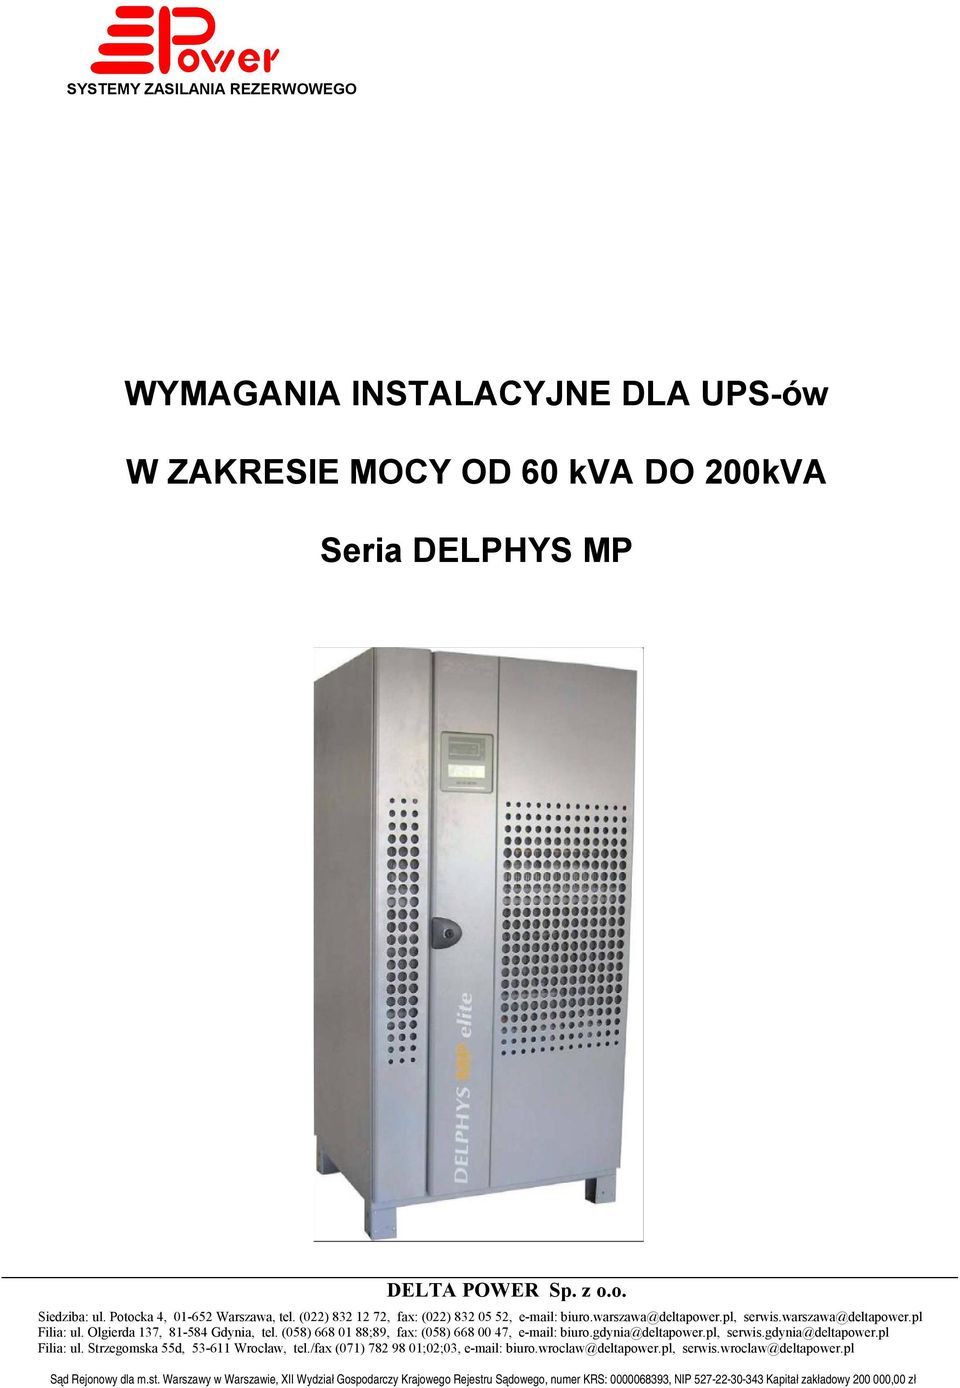 (058) 668 01 88;89, fax: (058) 668 00 47, e-mail: biuro.gdynia@deltapower.pl, serwis.gdynia@deltapower.pl Filia: ul. Strzegomska 55d, 53-611 Wrocław, tel.